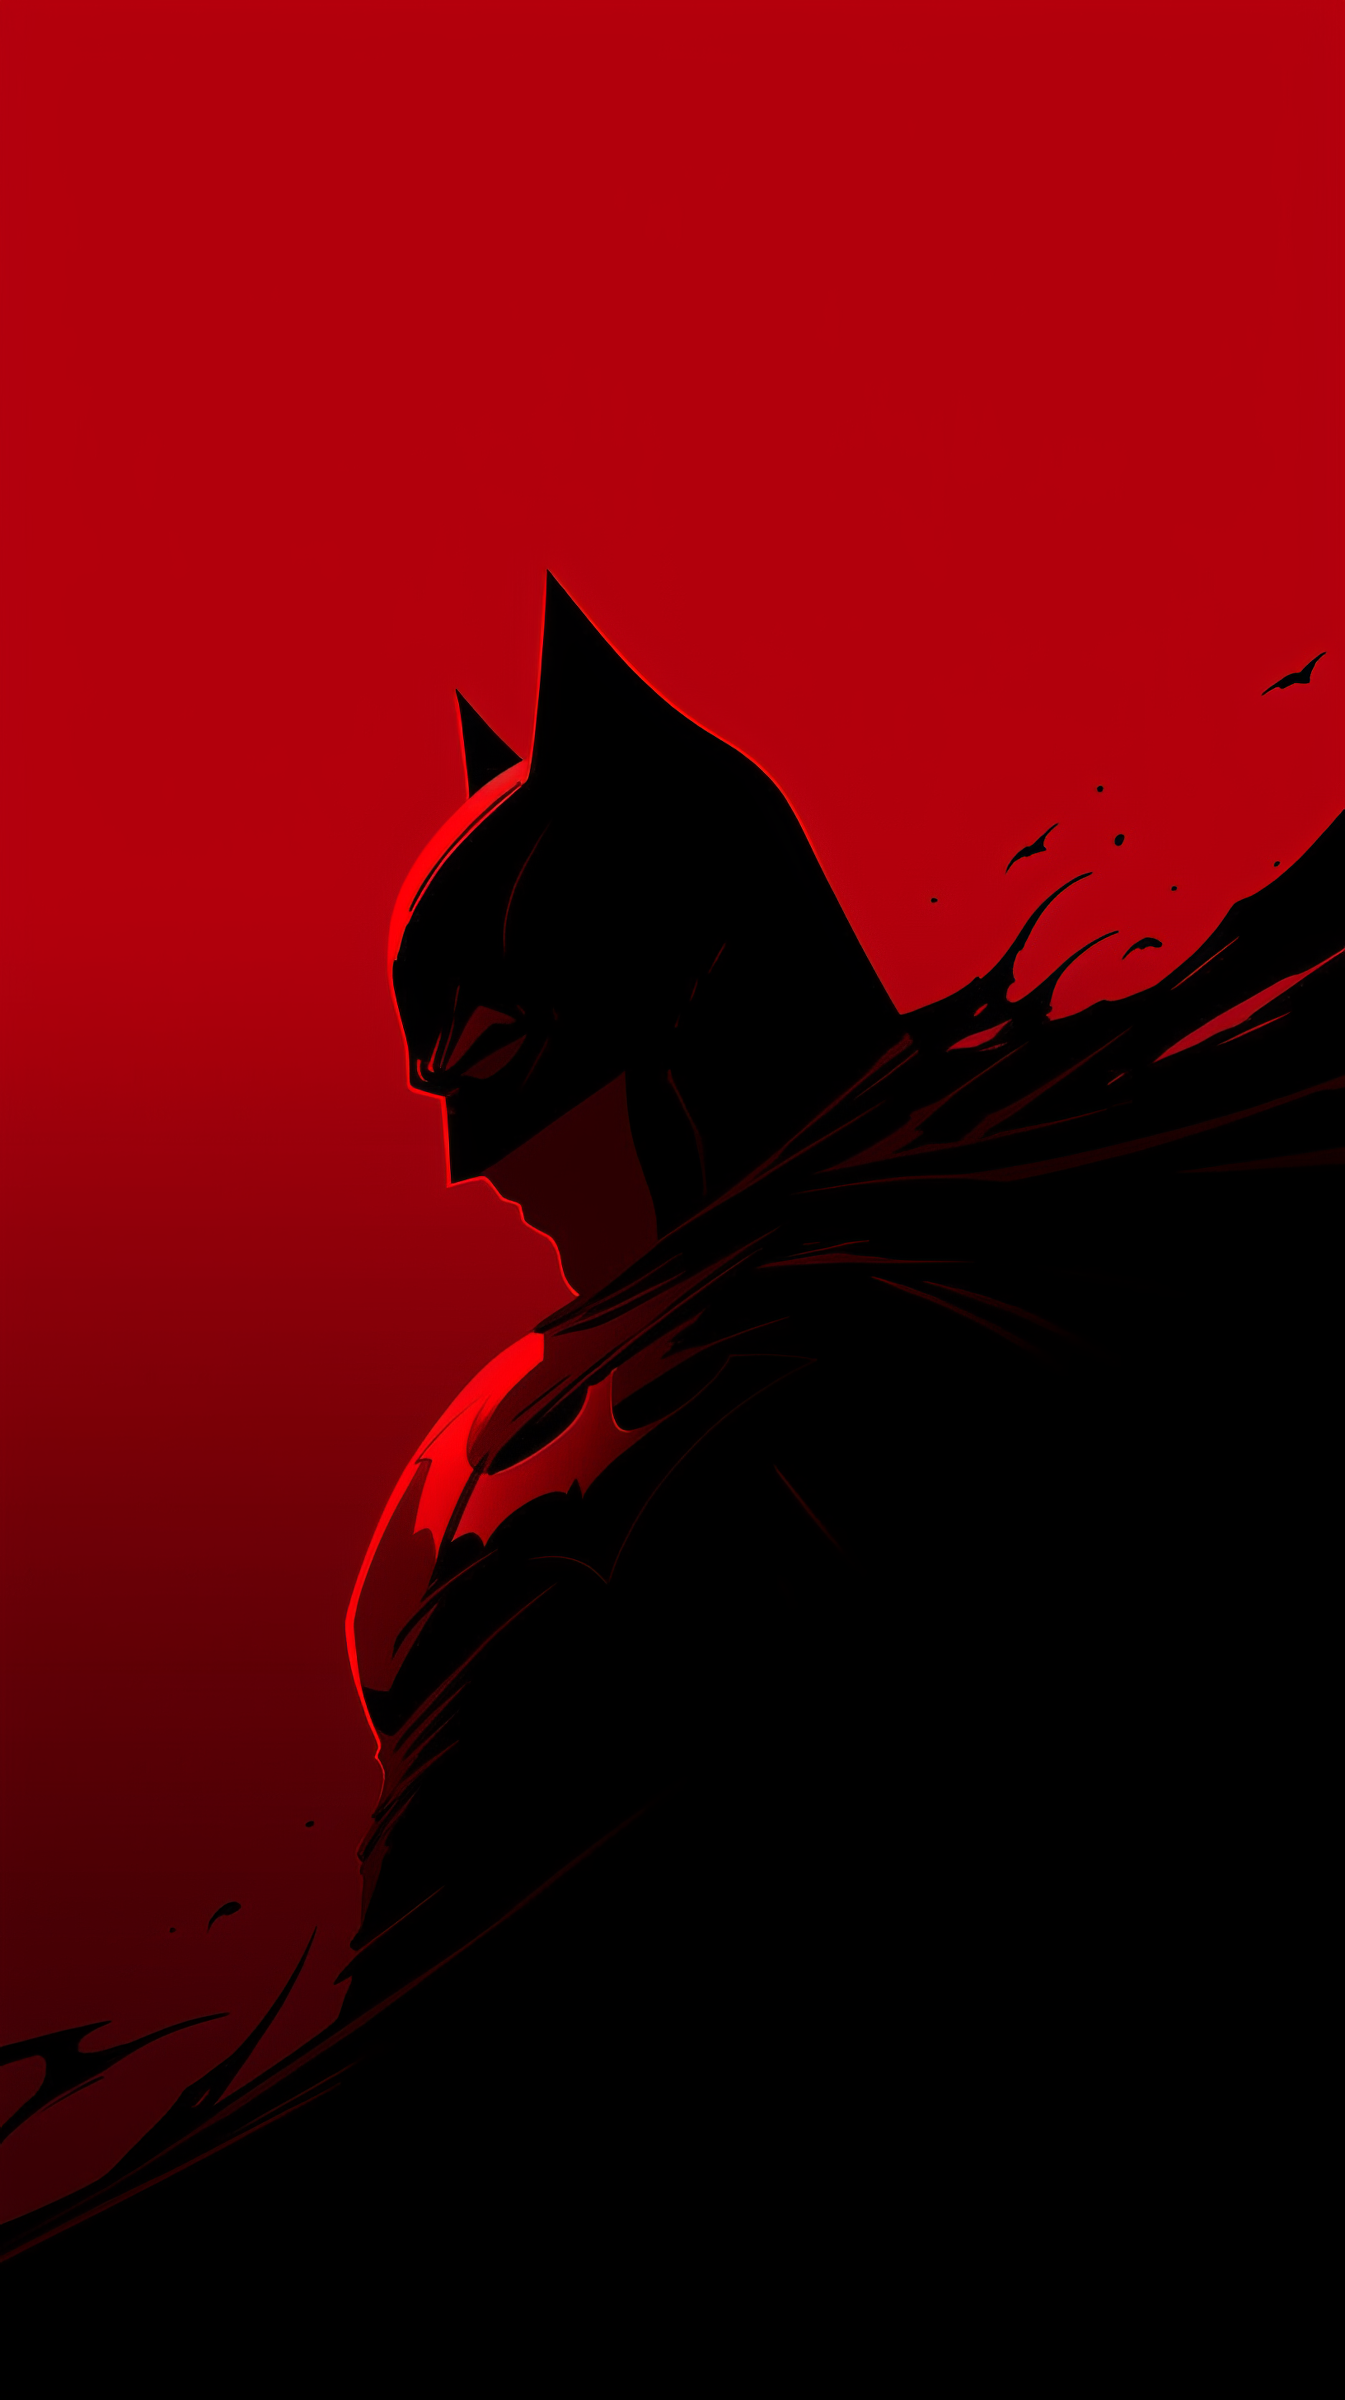 Minimalist Batman silhouette on a red background, phone wallpaper.